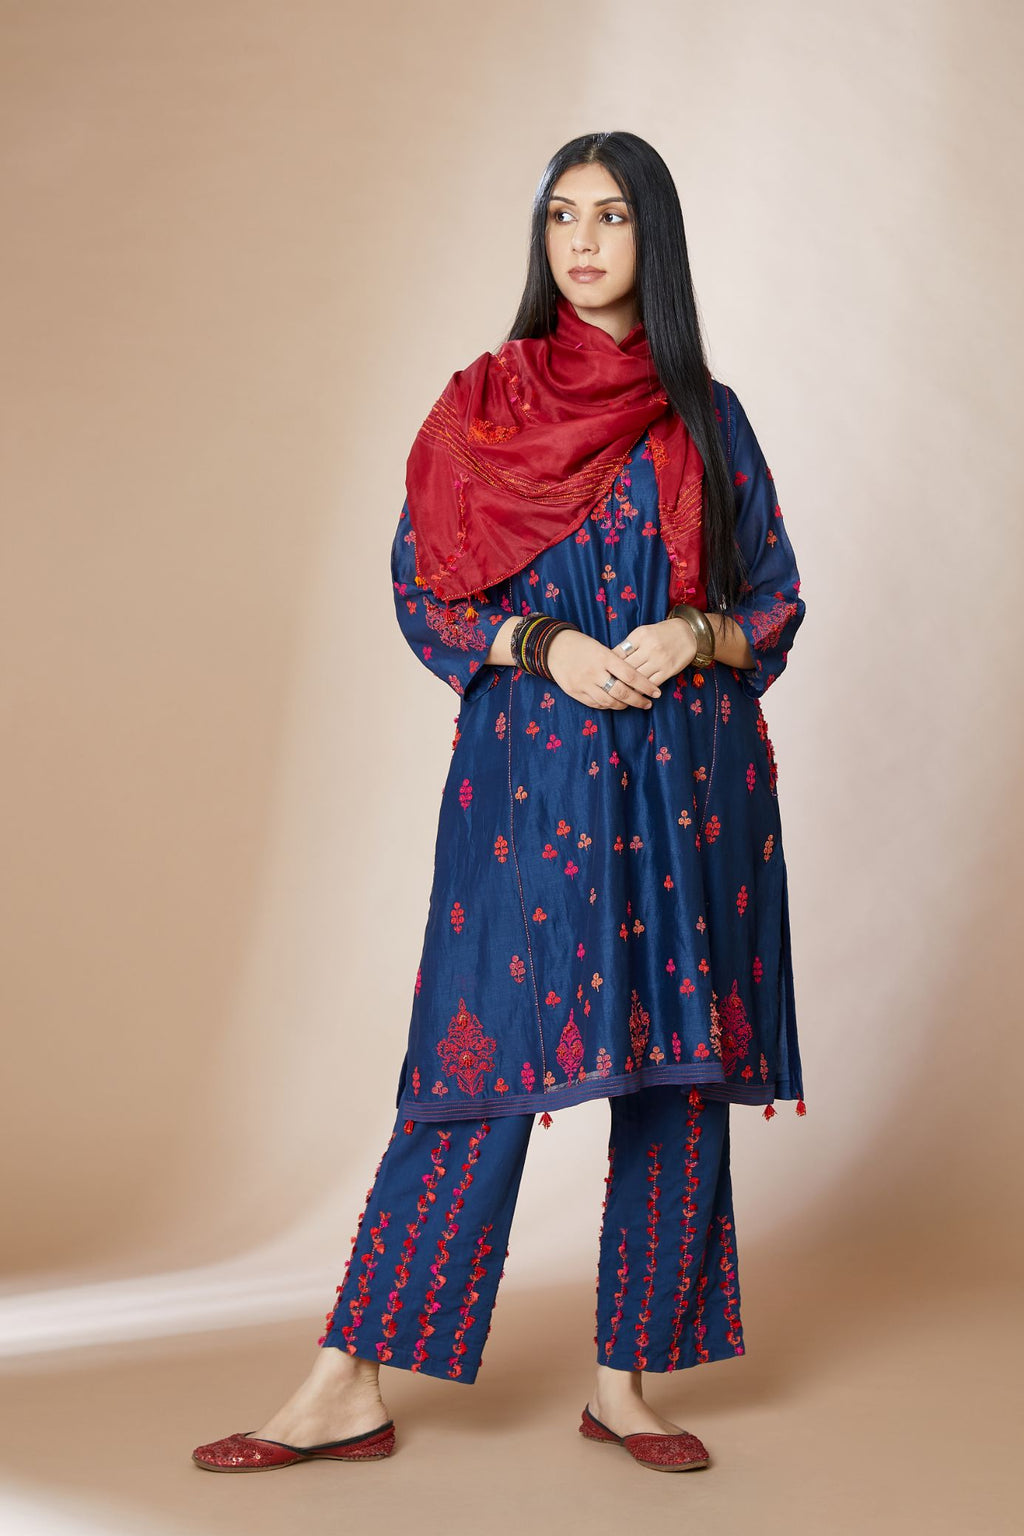 Indigo blue short kalidar kurta set, highlighted with delicate contrast coloured embroidery